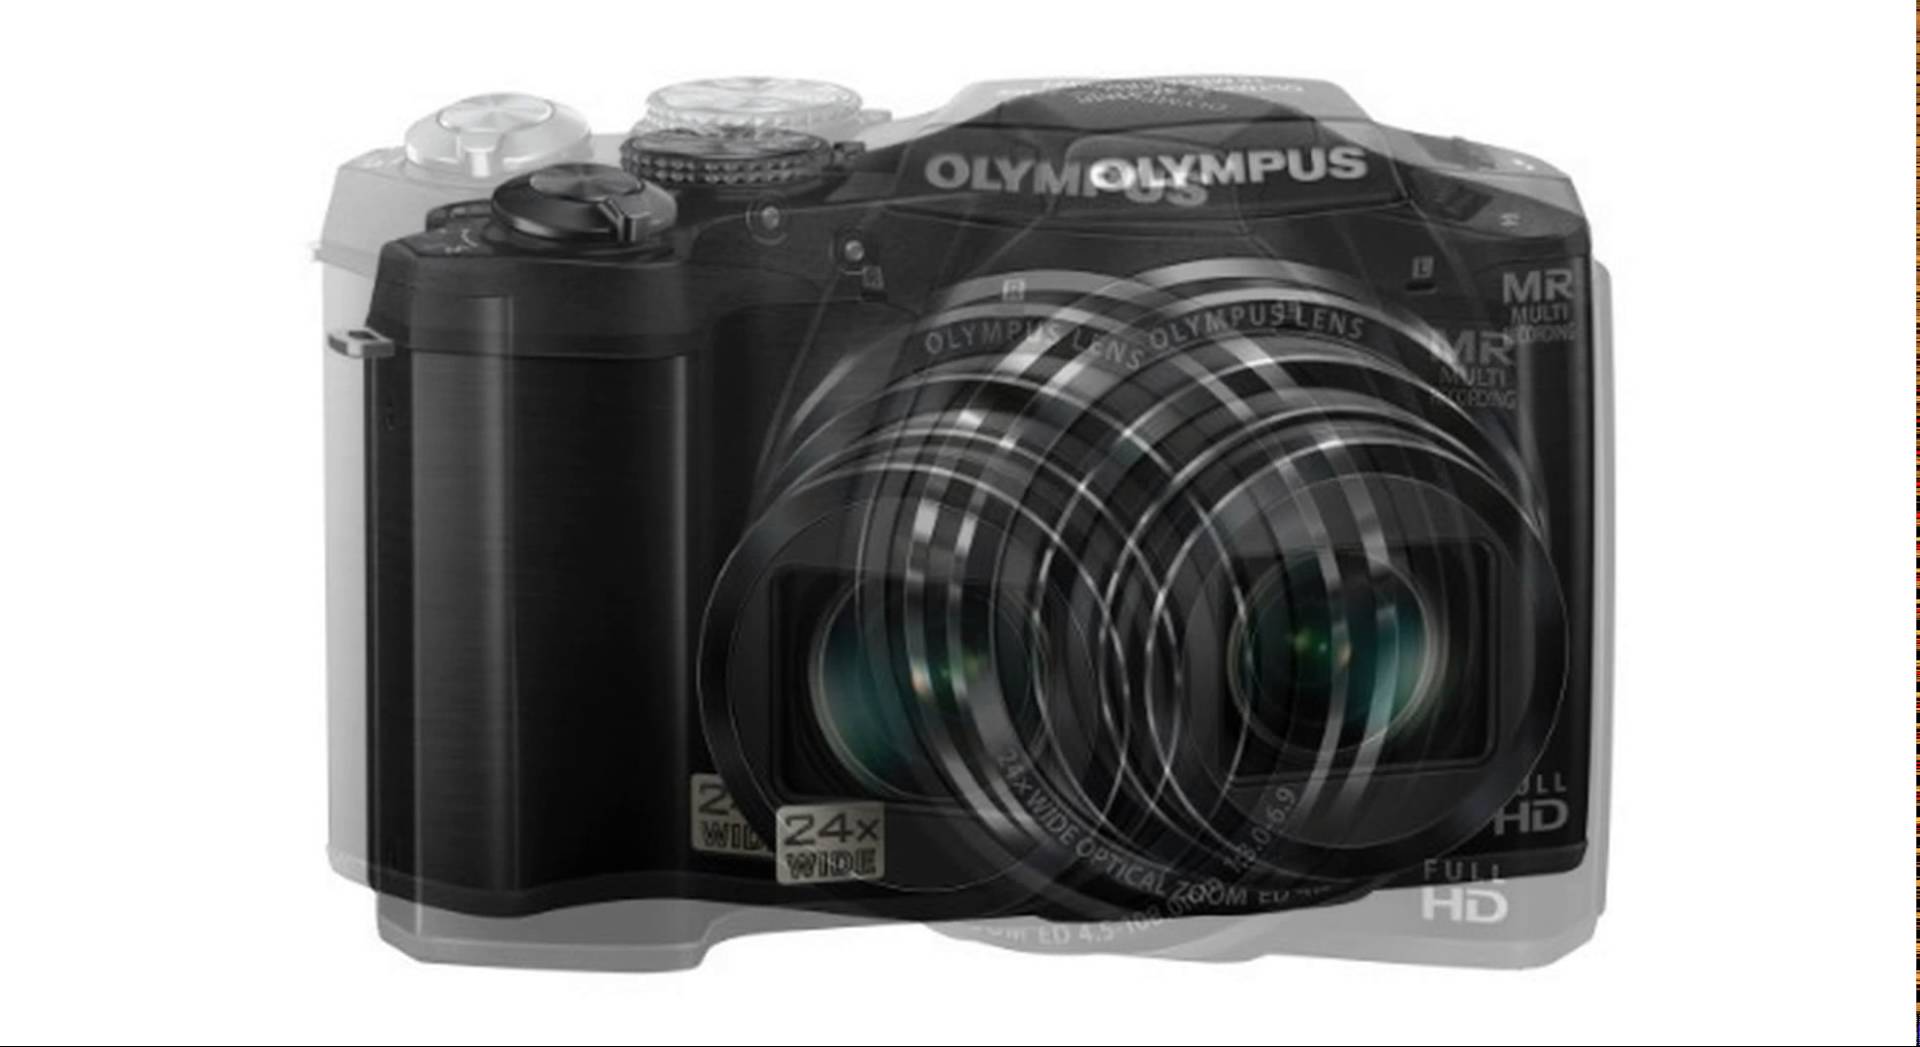 Olympus SZ-31MR Digitalkamera  Display, 3D Fotos , bildstabilisiert) schwarz camera Review